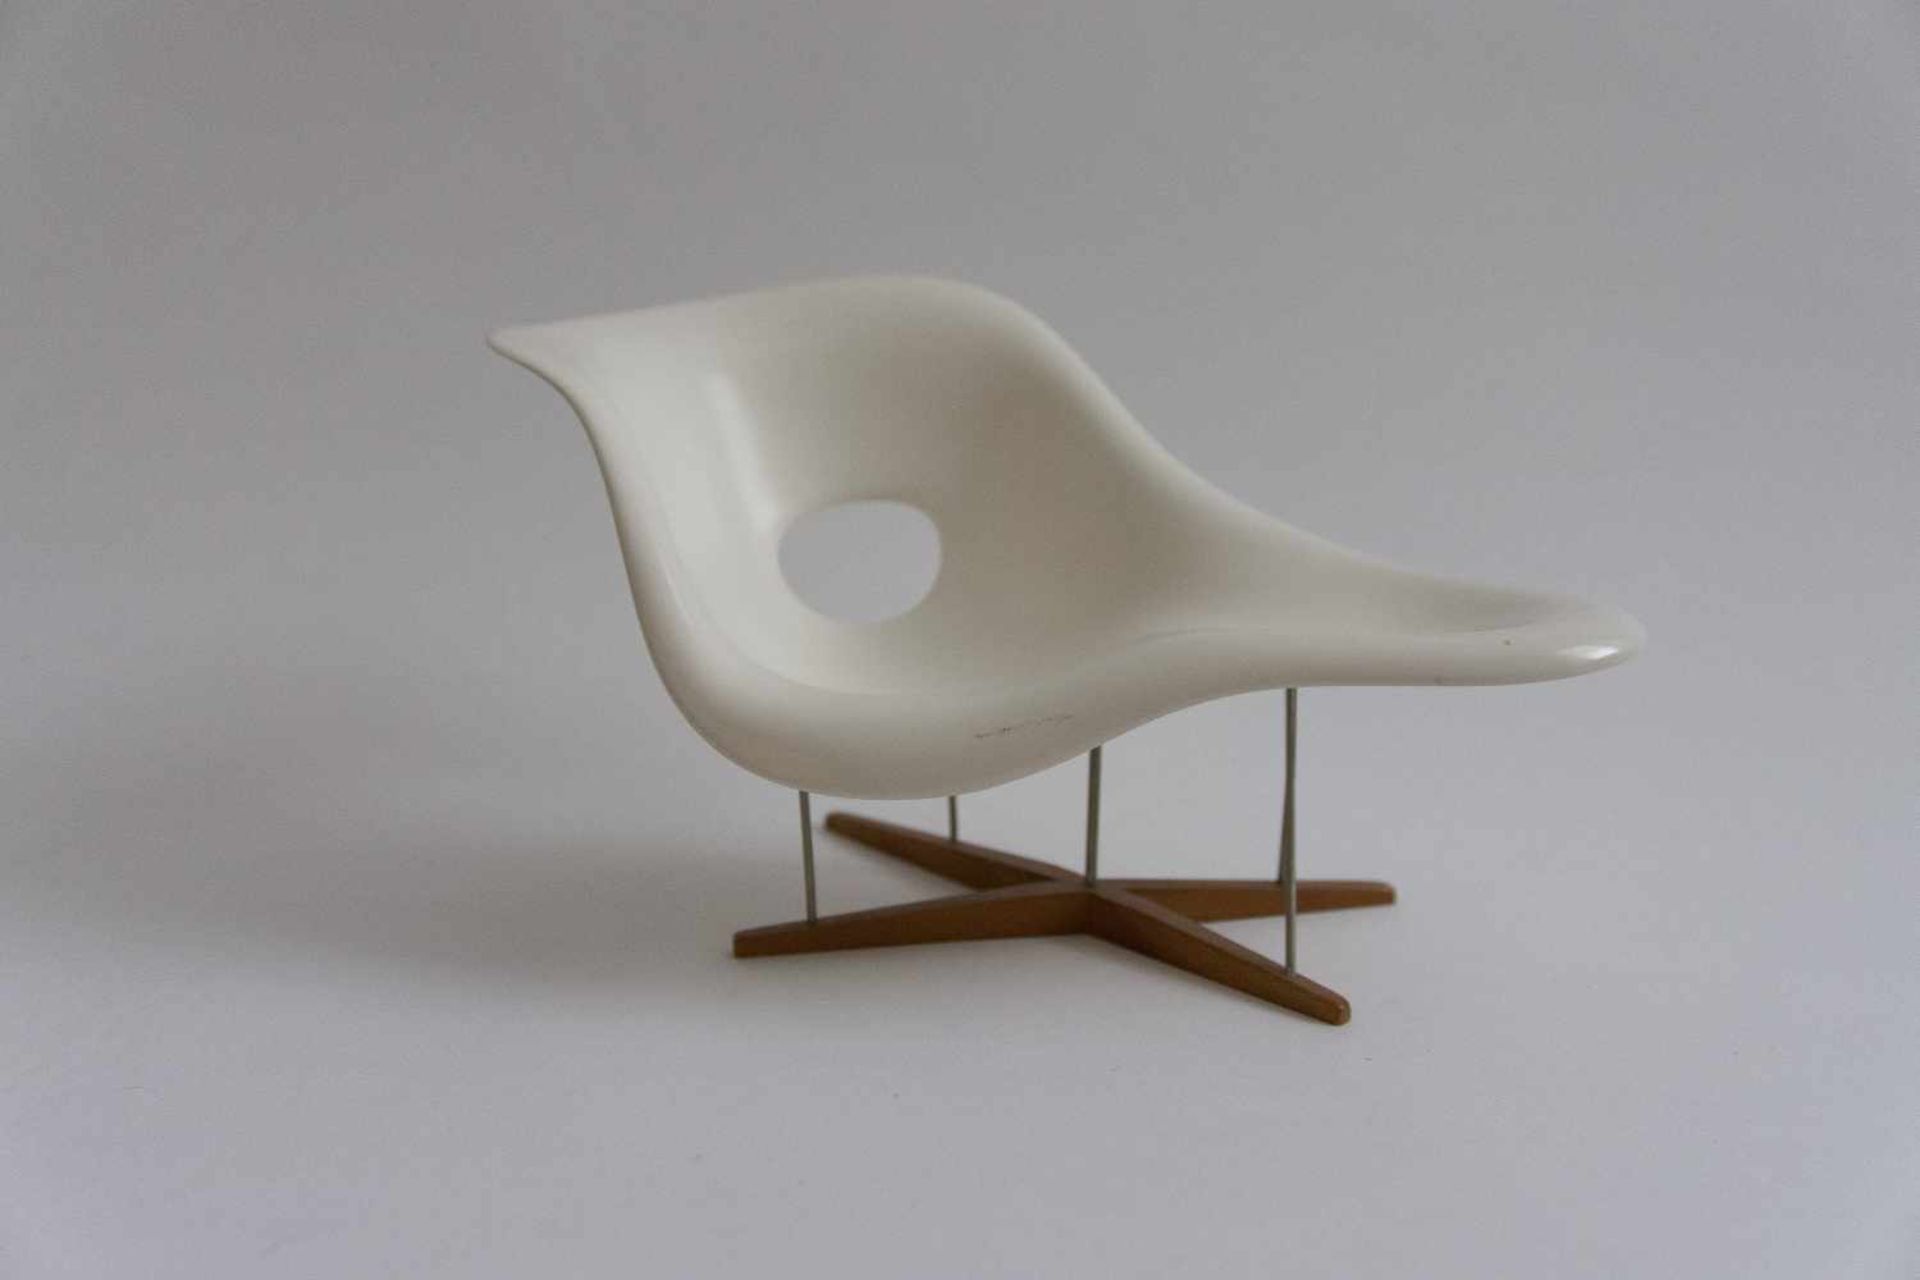 VITRA DESIGN Miniatur Stühle, nach Originalen, Metall/Plastik, um 1990 Drei Miniatur Design-Stühle - Bild 2 aus 4